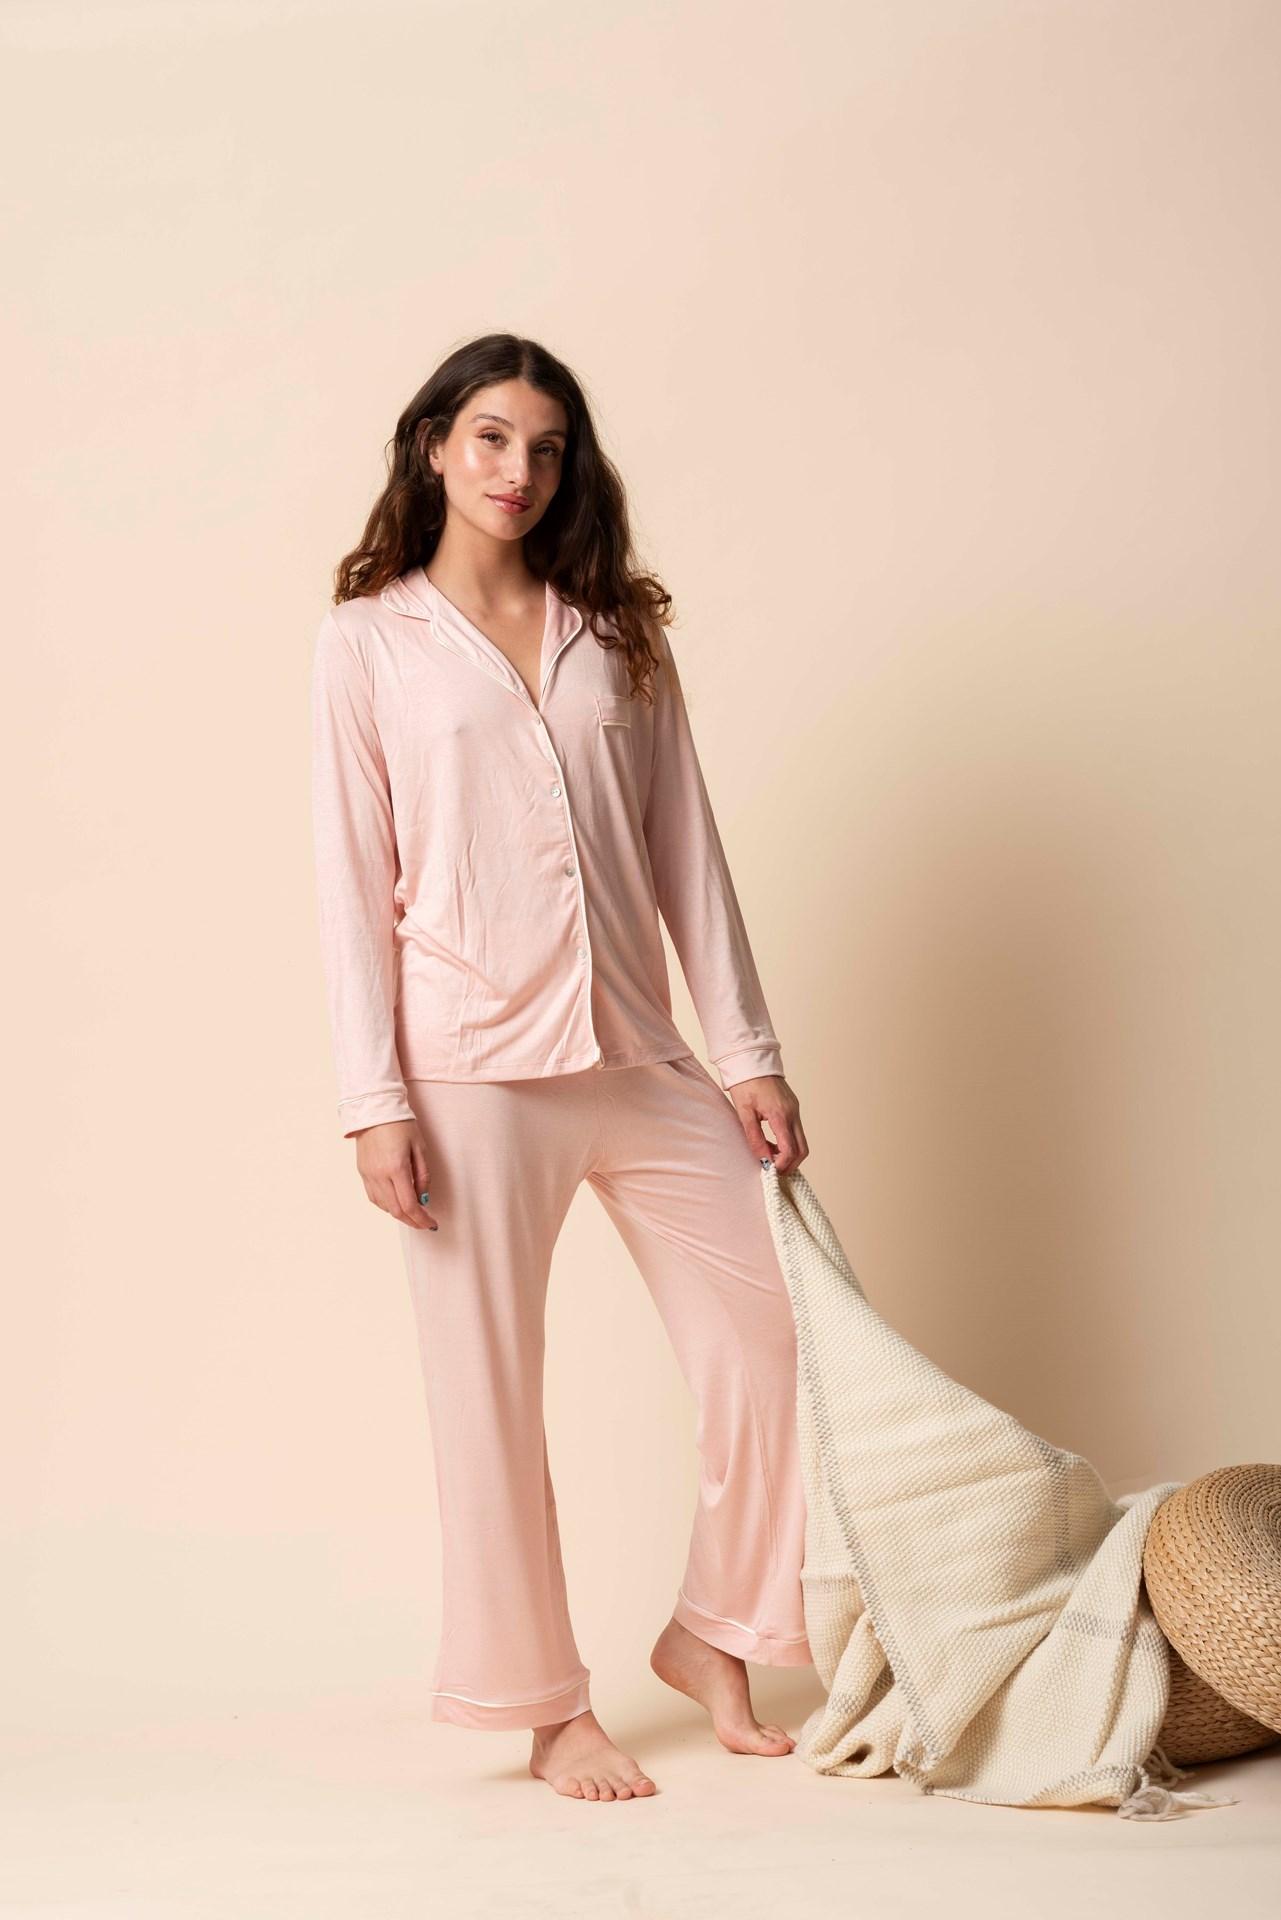 Donatella - Pijama Camisero Largo rosado pastel s